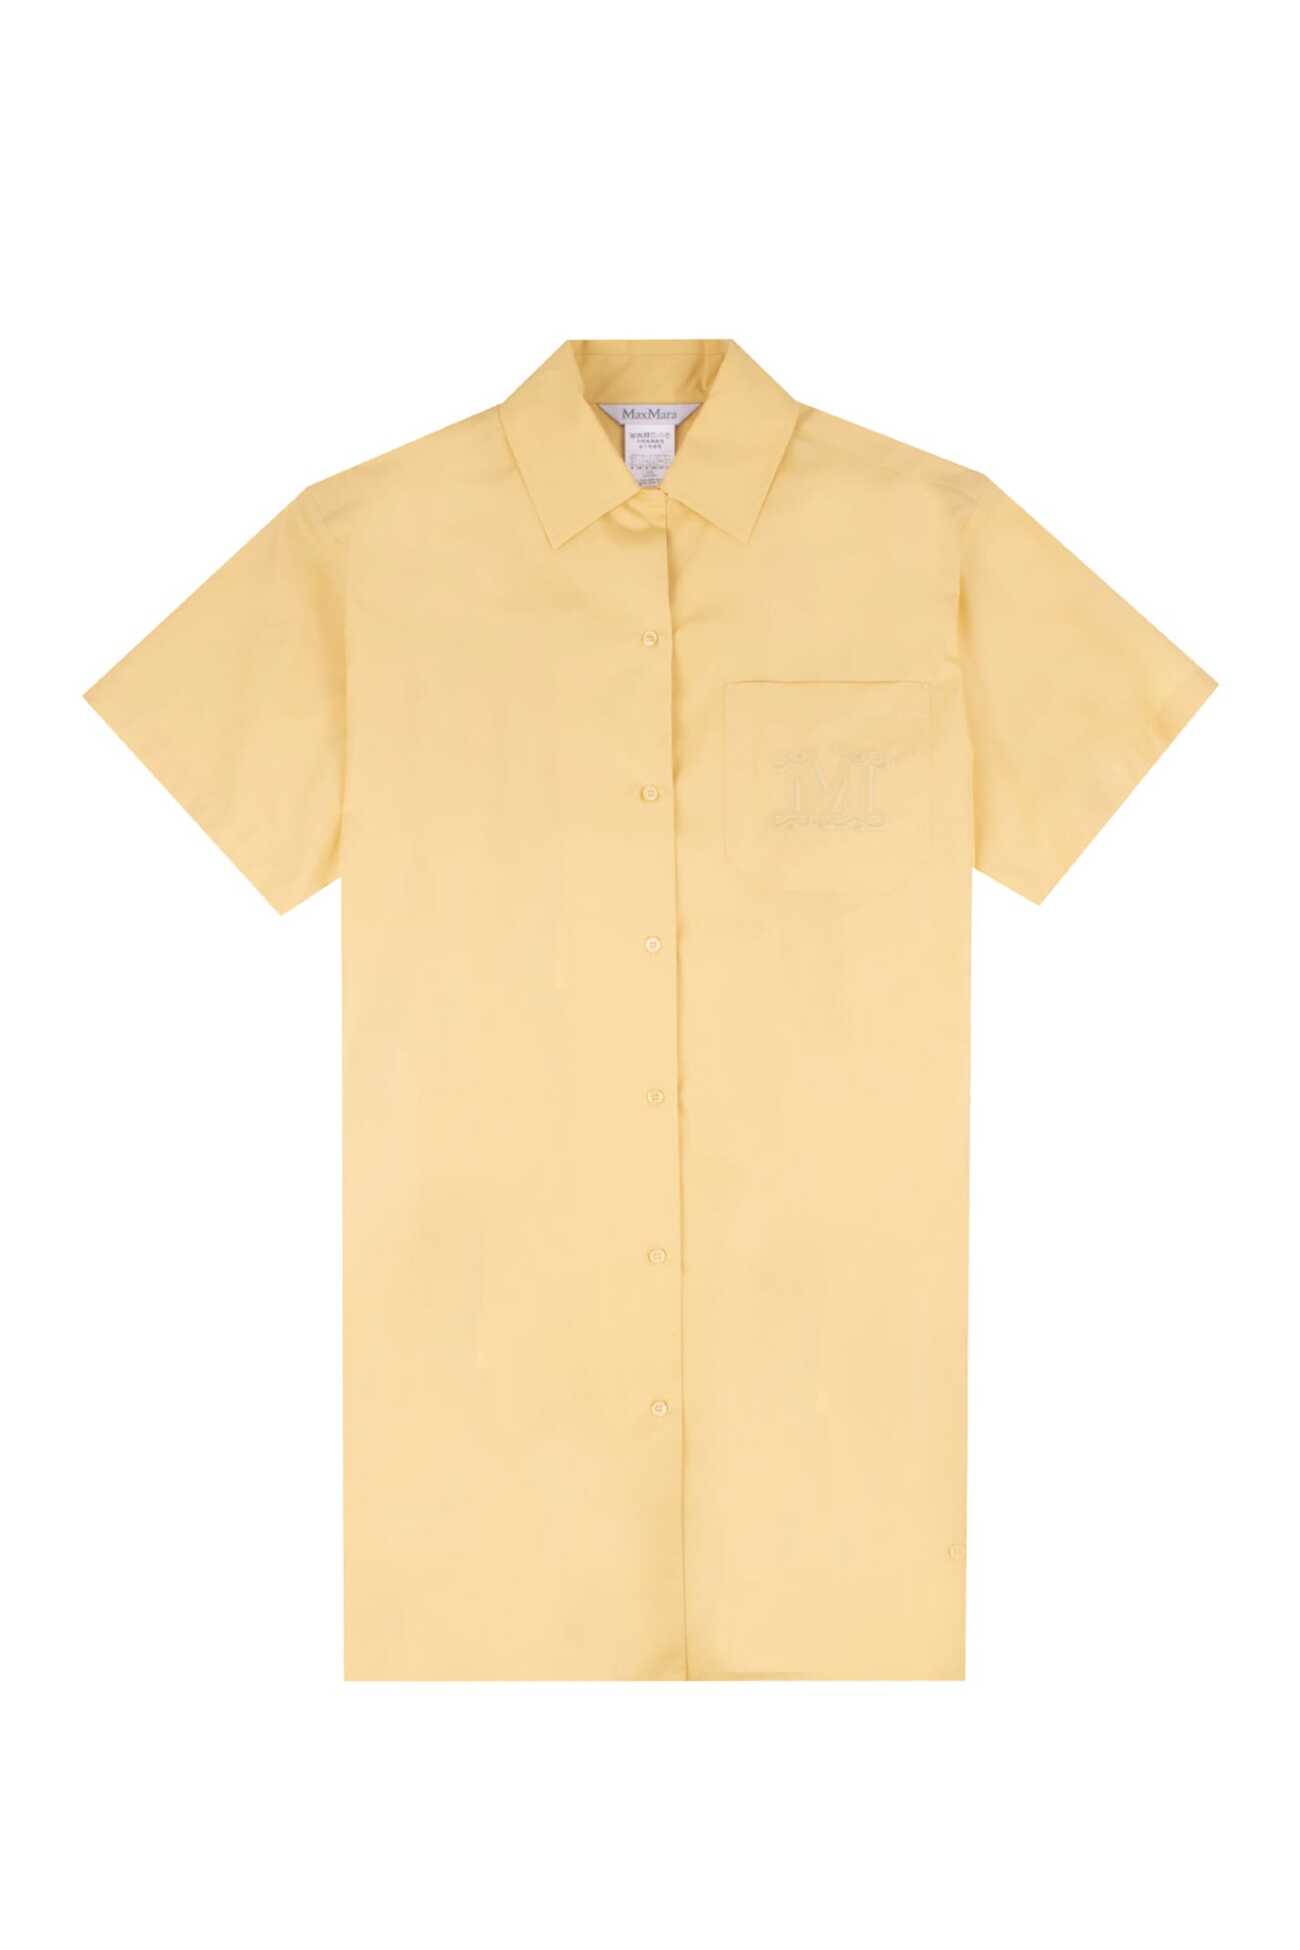 Max Mara Cotton Shirt in yellow